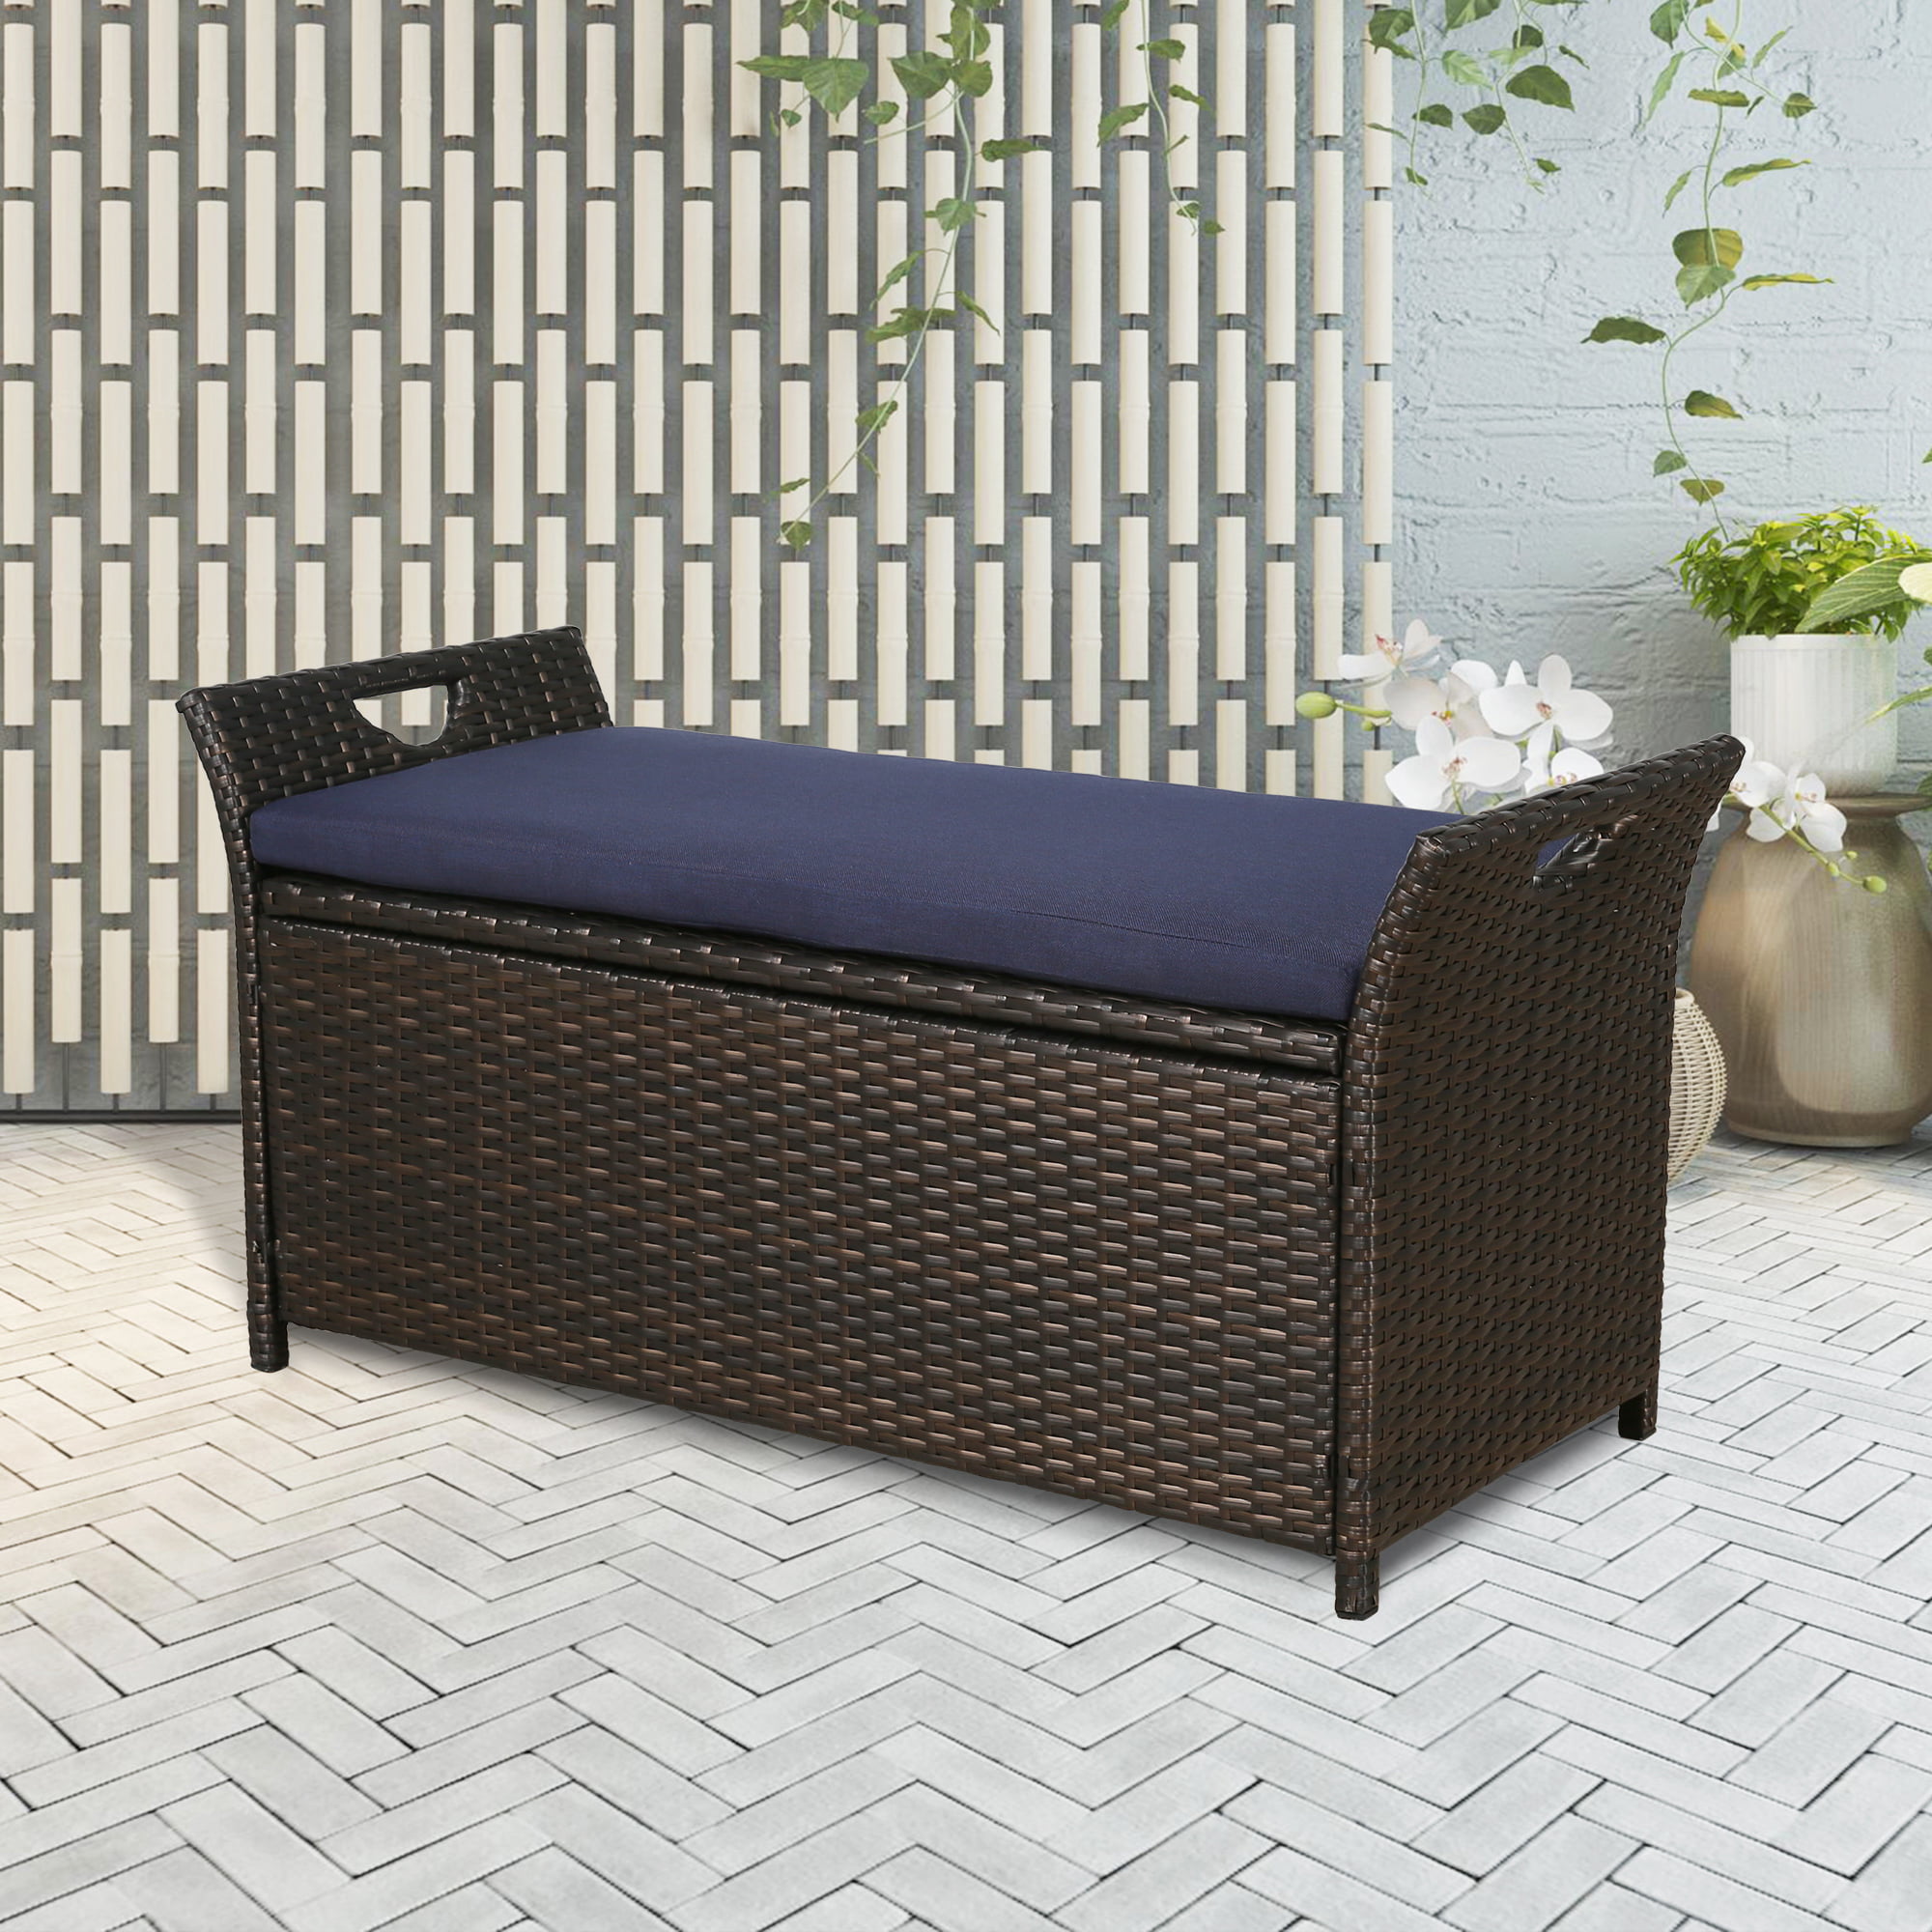 Ulax Furniture Patio Wicker Storage Box, Outdoor Rattan Storage Bench